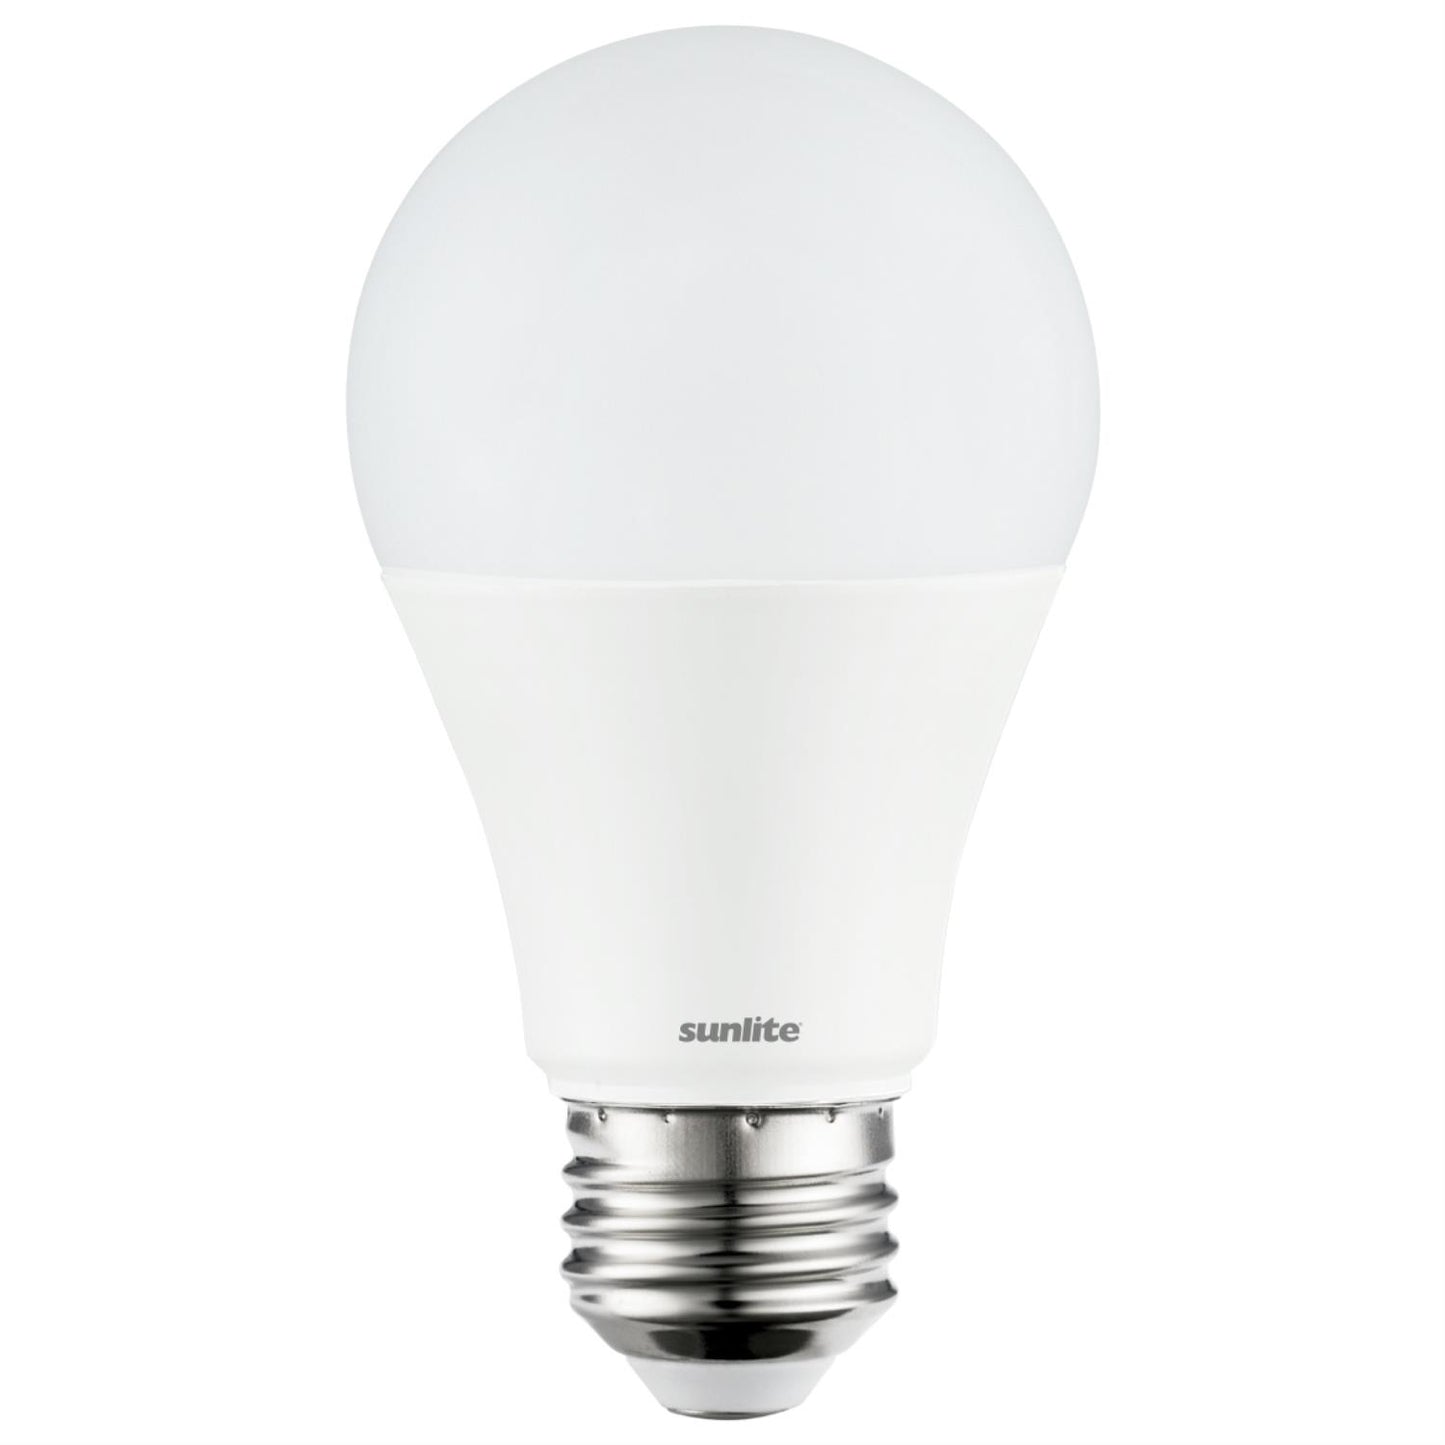 Sunlite 80598-SU LED A19 Super Bright Light Bulb, Dimmable, 14 Watt (100 Watt Equivalent), 1500 Lumens, Medium (E26) Base, UL Listed, 50K - Super White 1 Pack